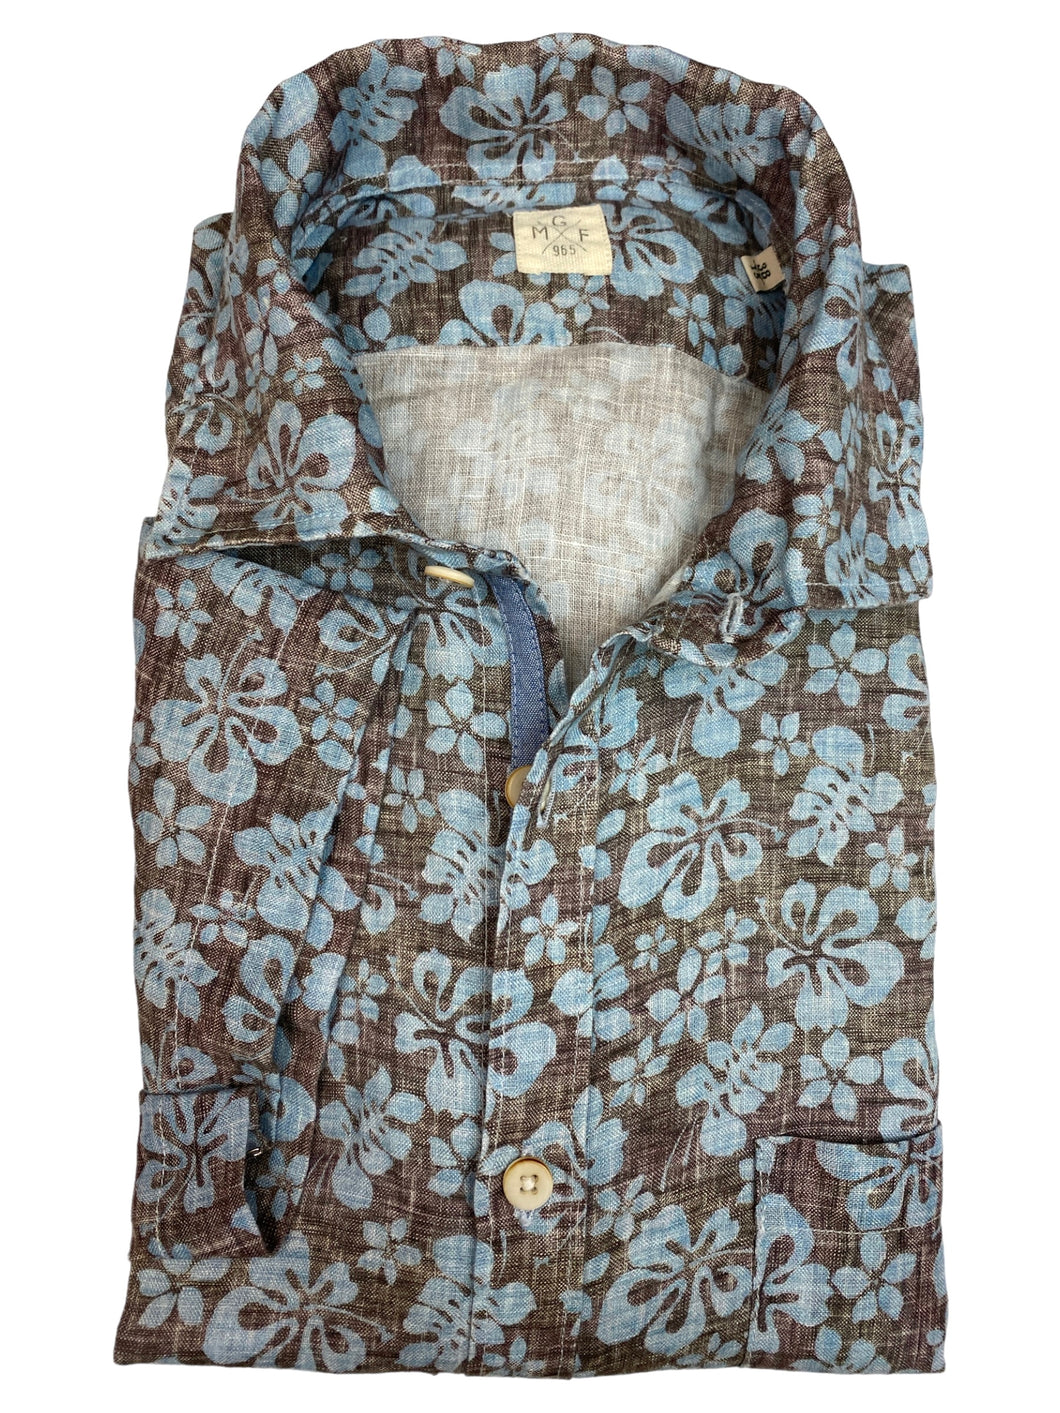 GMF 965 Short Sleeve Linen/Cotton Shirt Brown W/Blue Floral